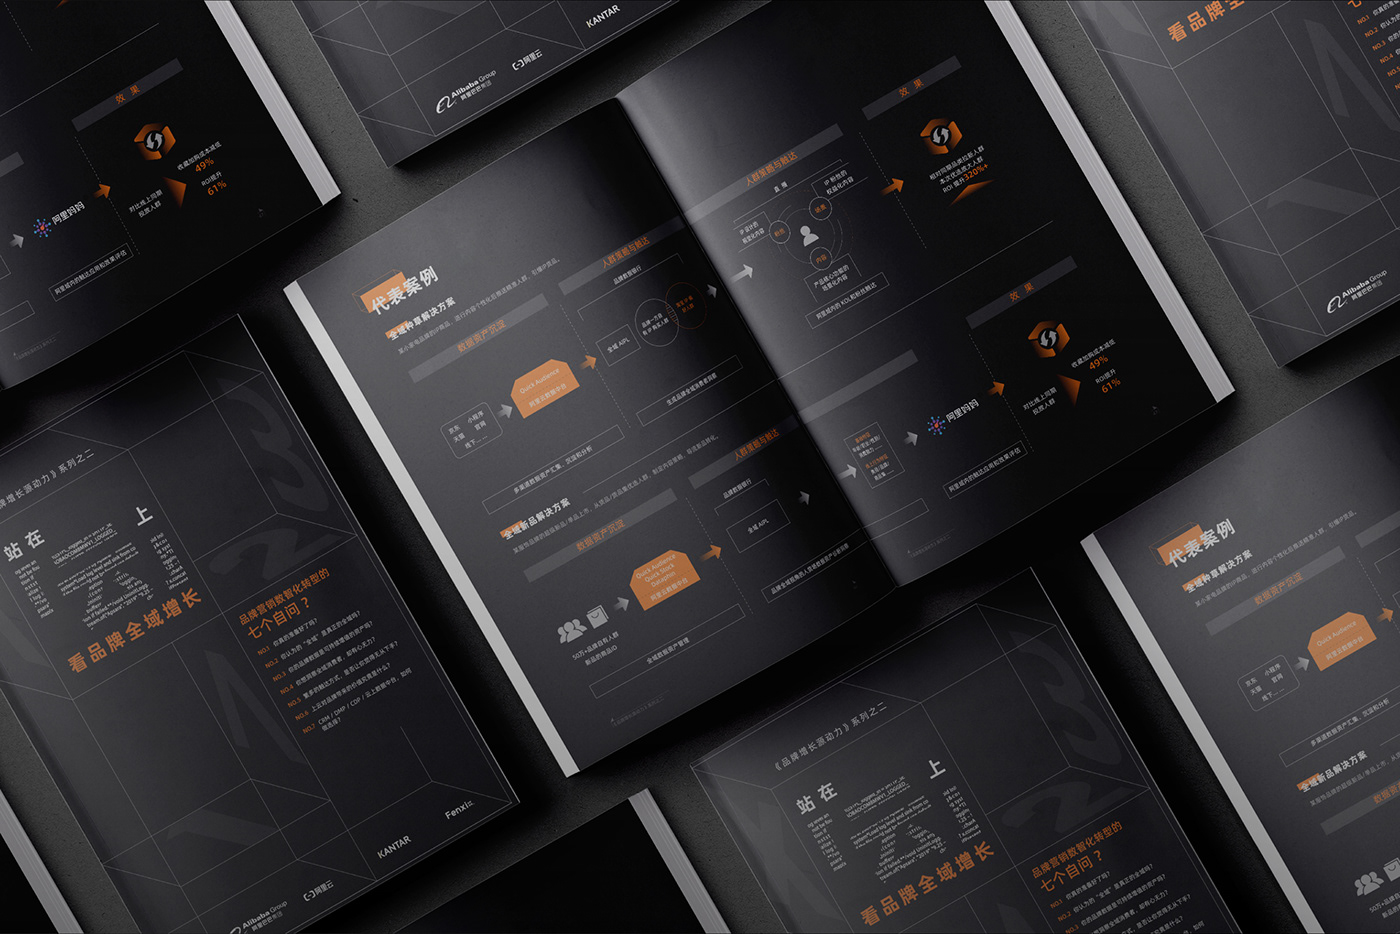 alibaba group book design Layout 书籍设计 阿里巴巴 阿里巴巴 全域营销小黑书